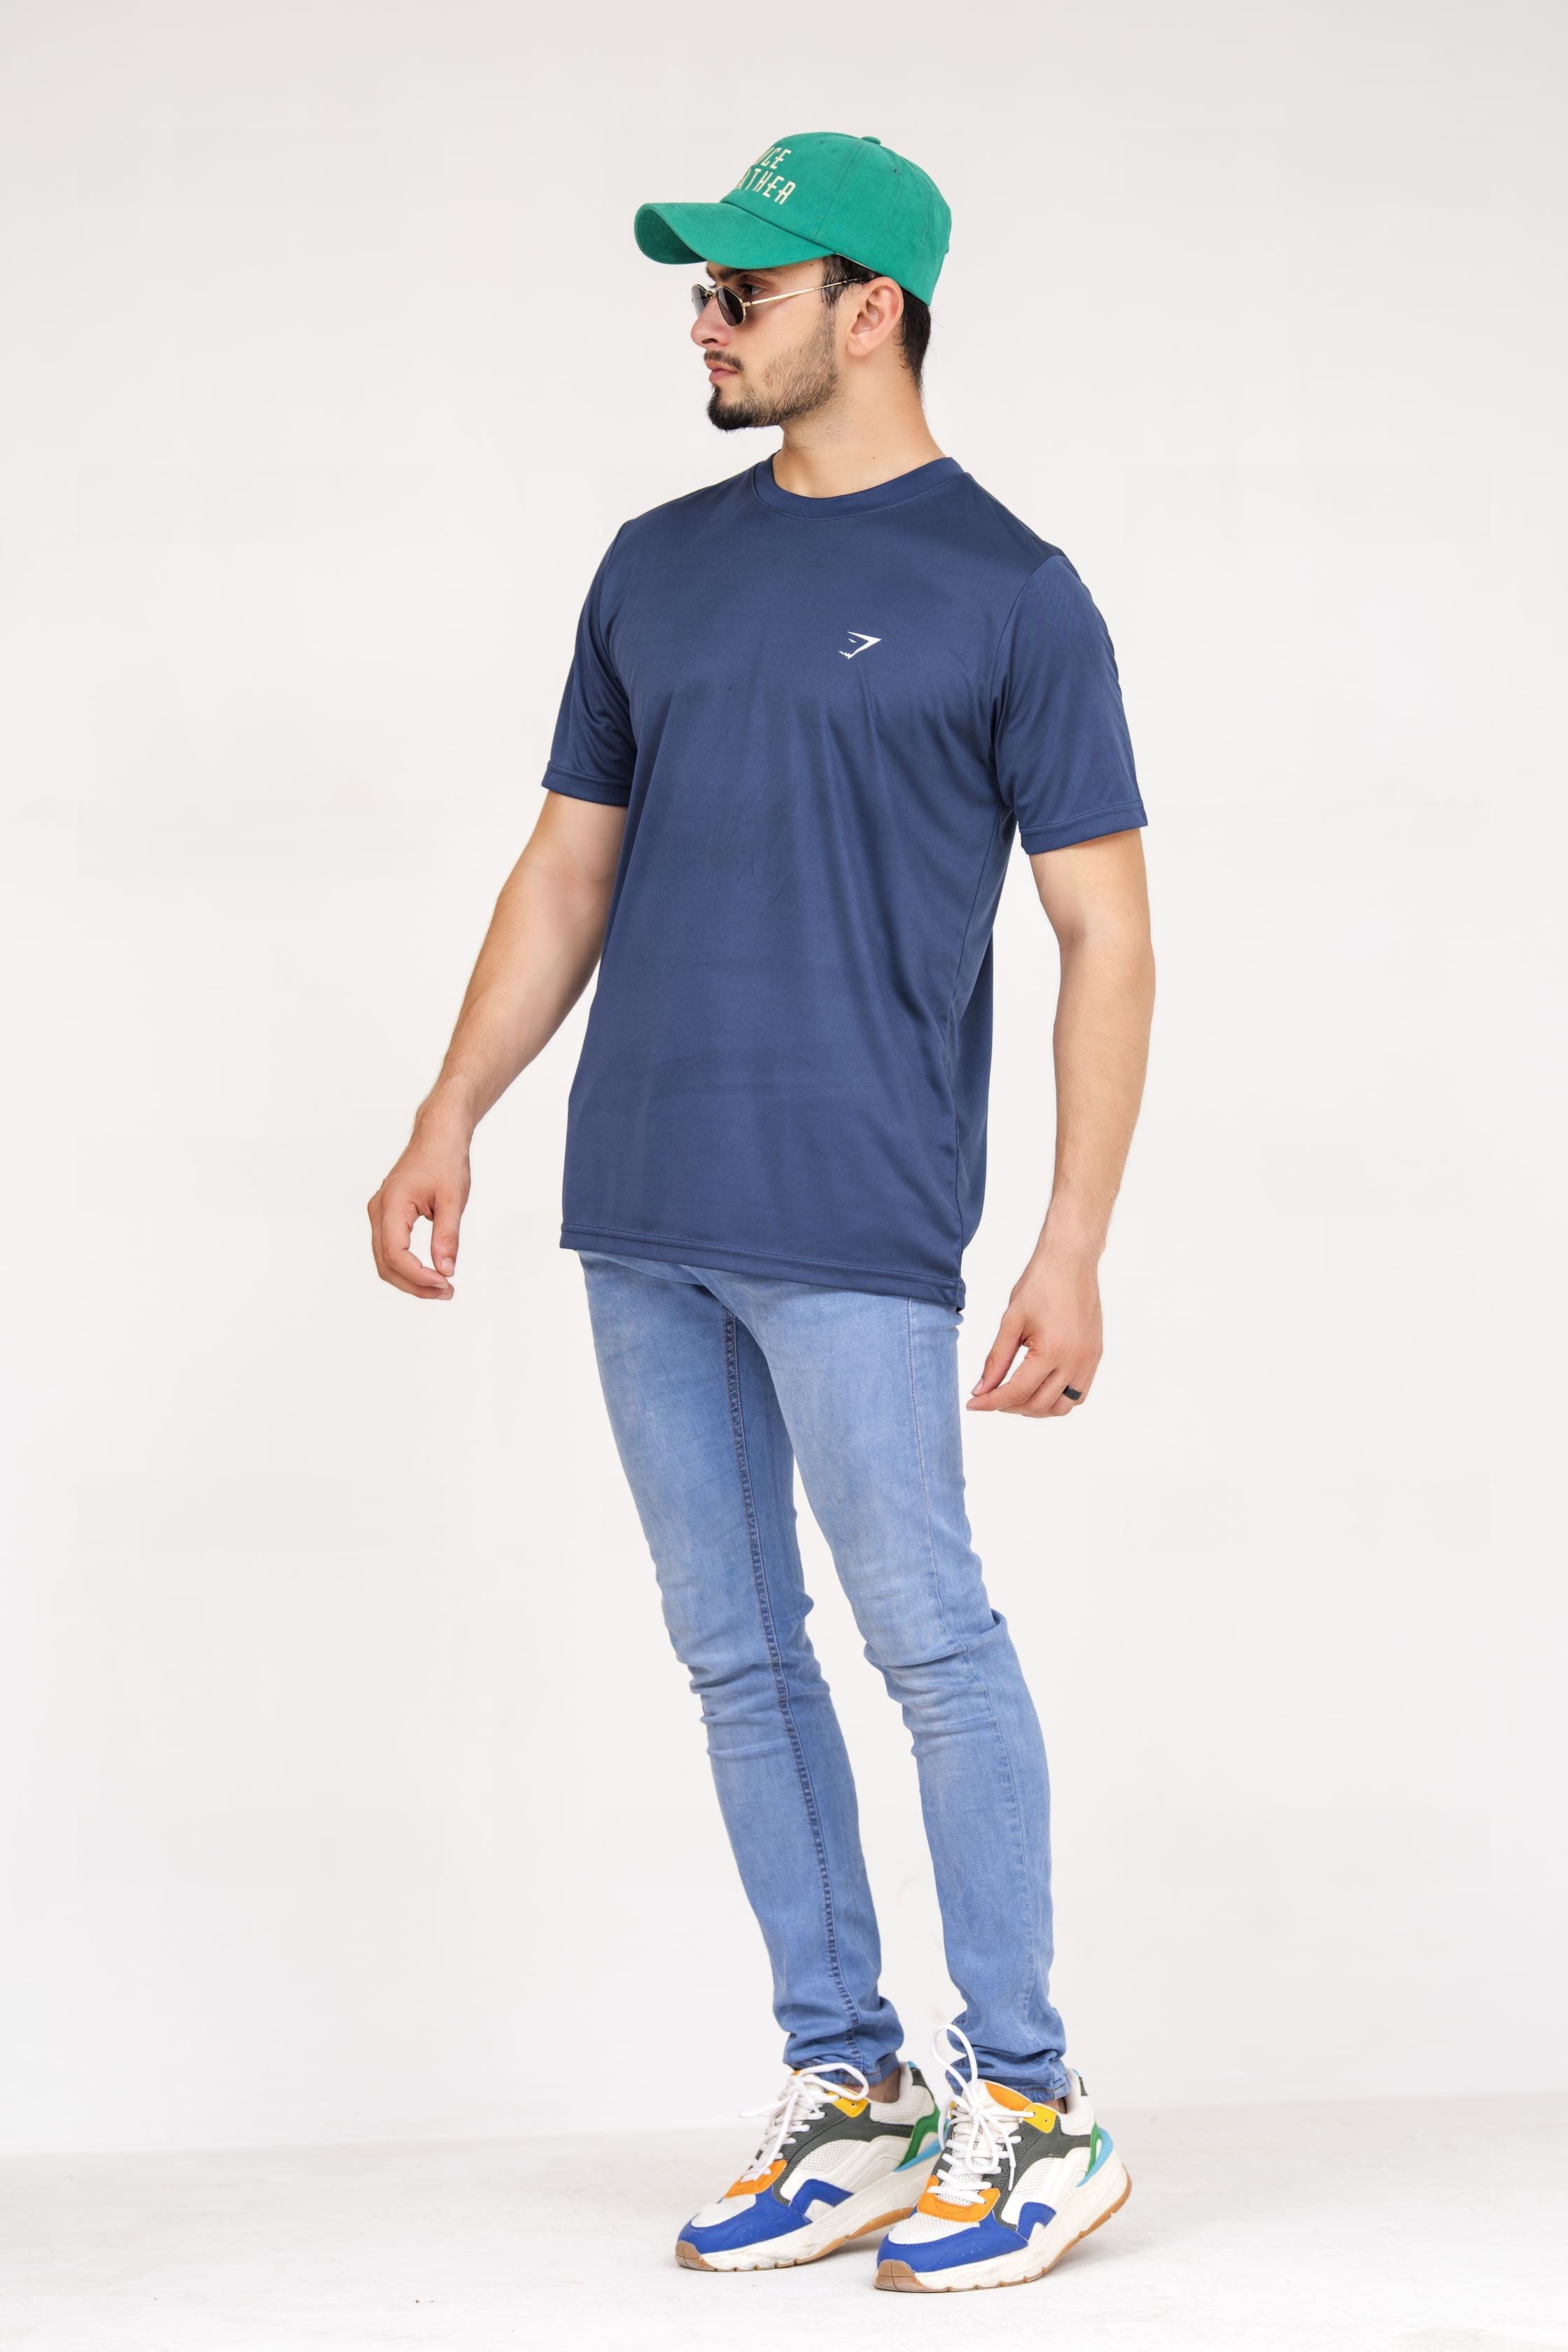 Gym Shark  Activewear T-shirt For Men-2276